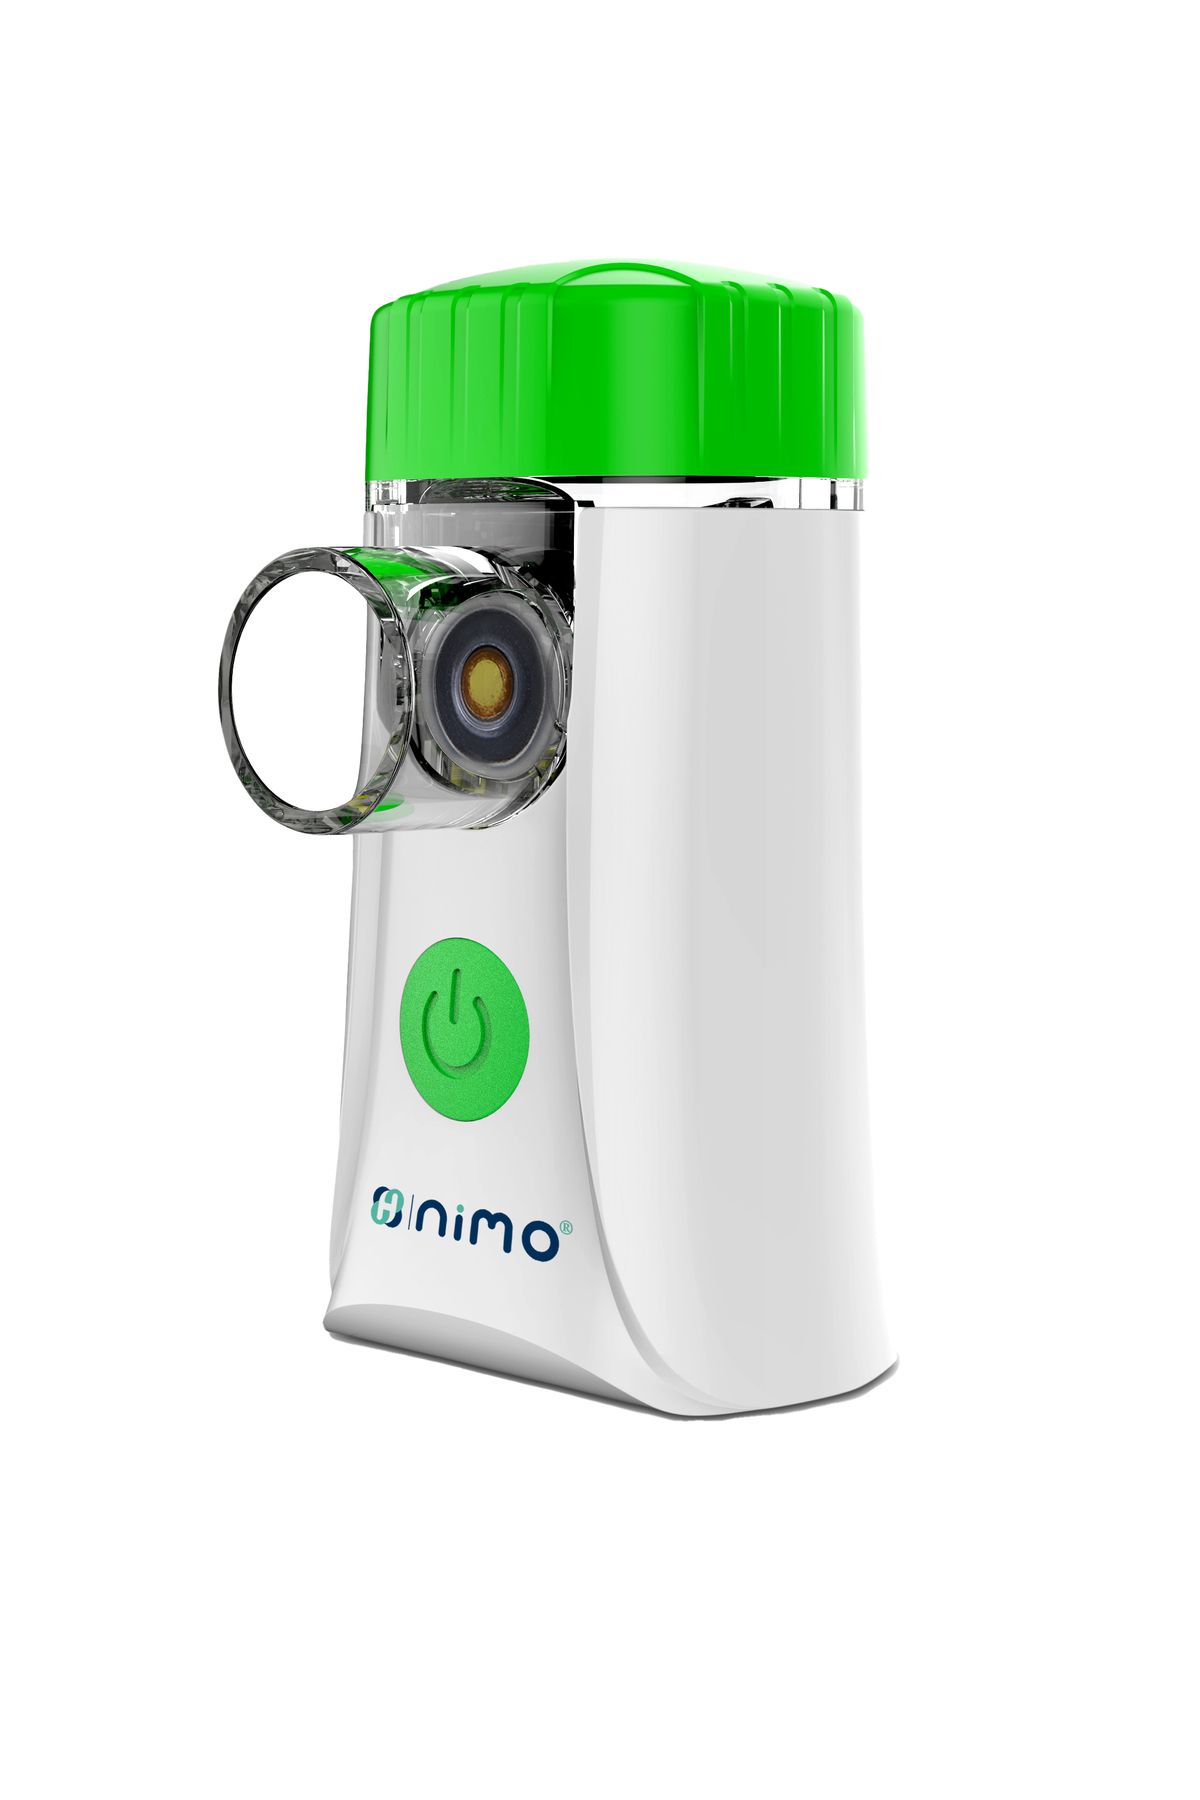 Nimo Taşınabilir Nebulizatör Solunum Cihazı